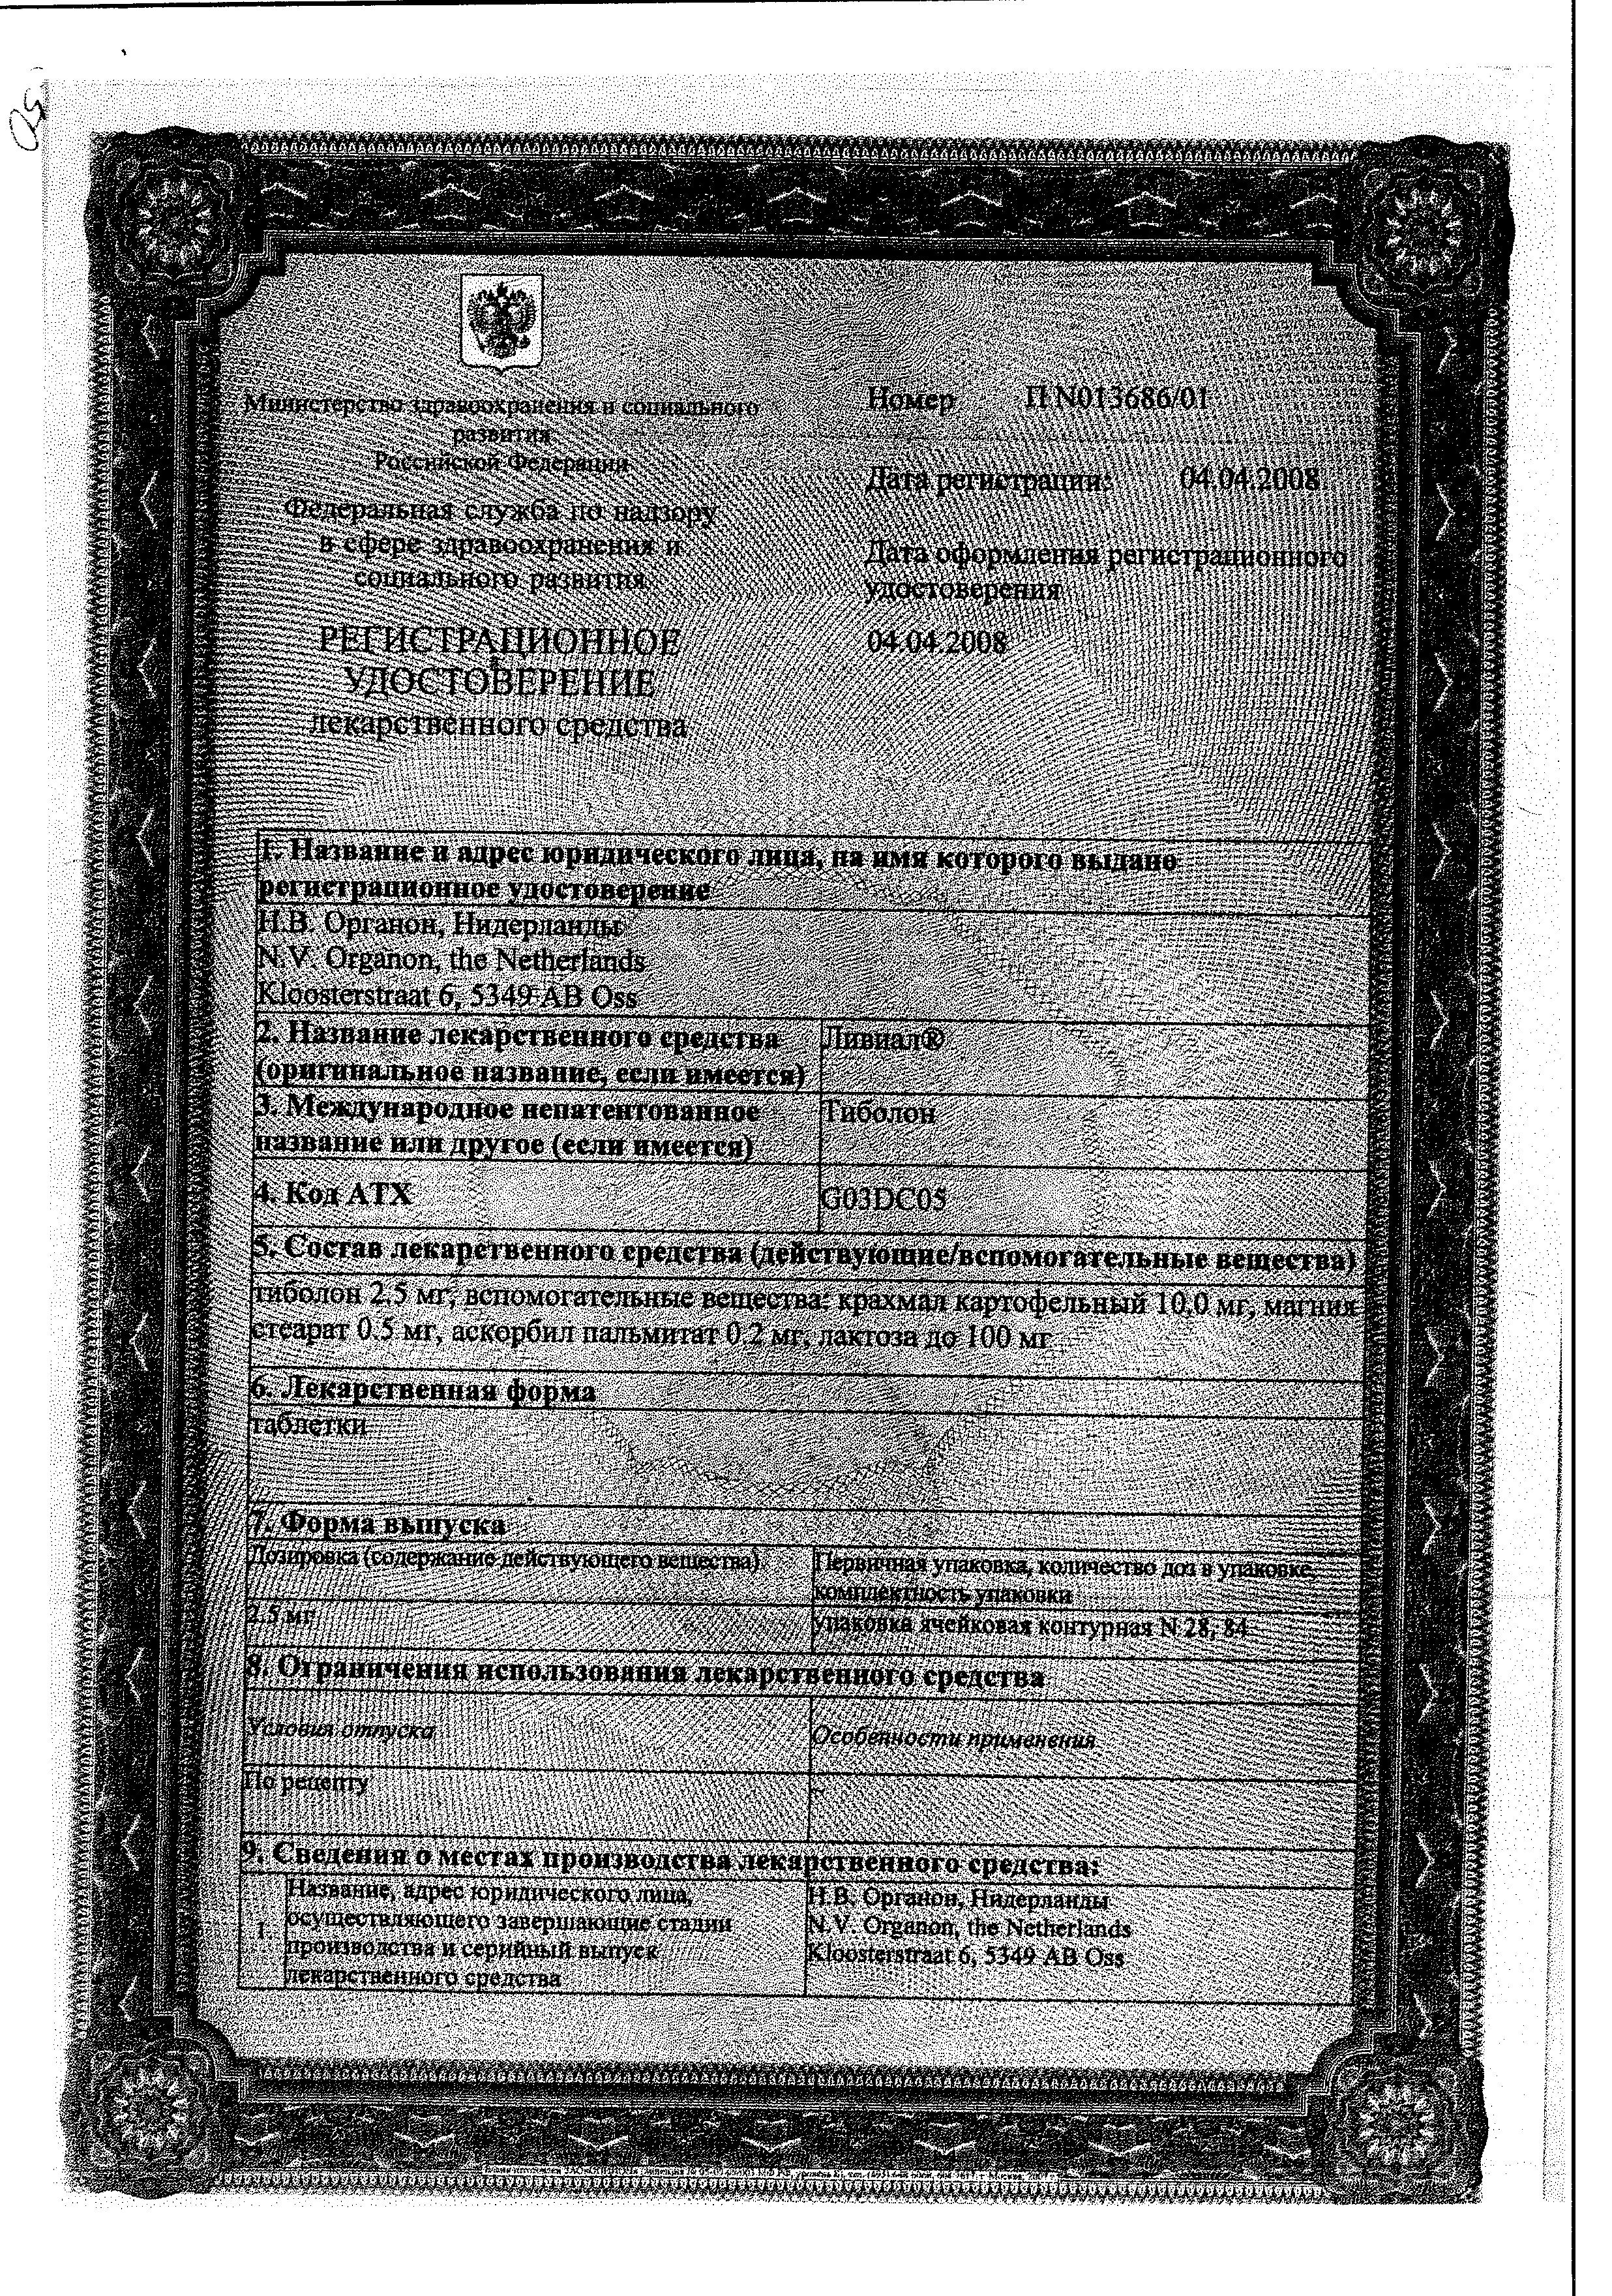 Ливиал сертификат